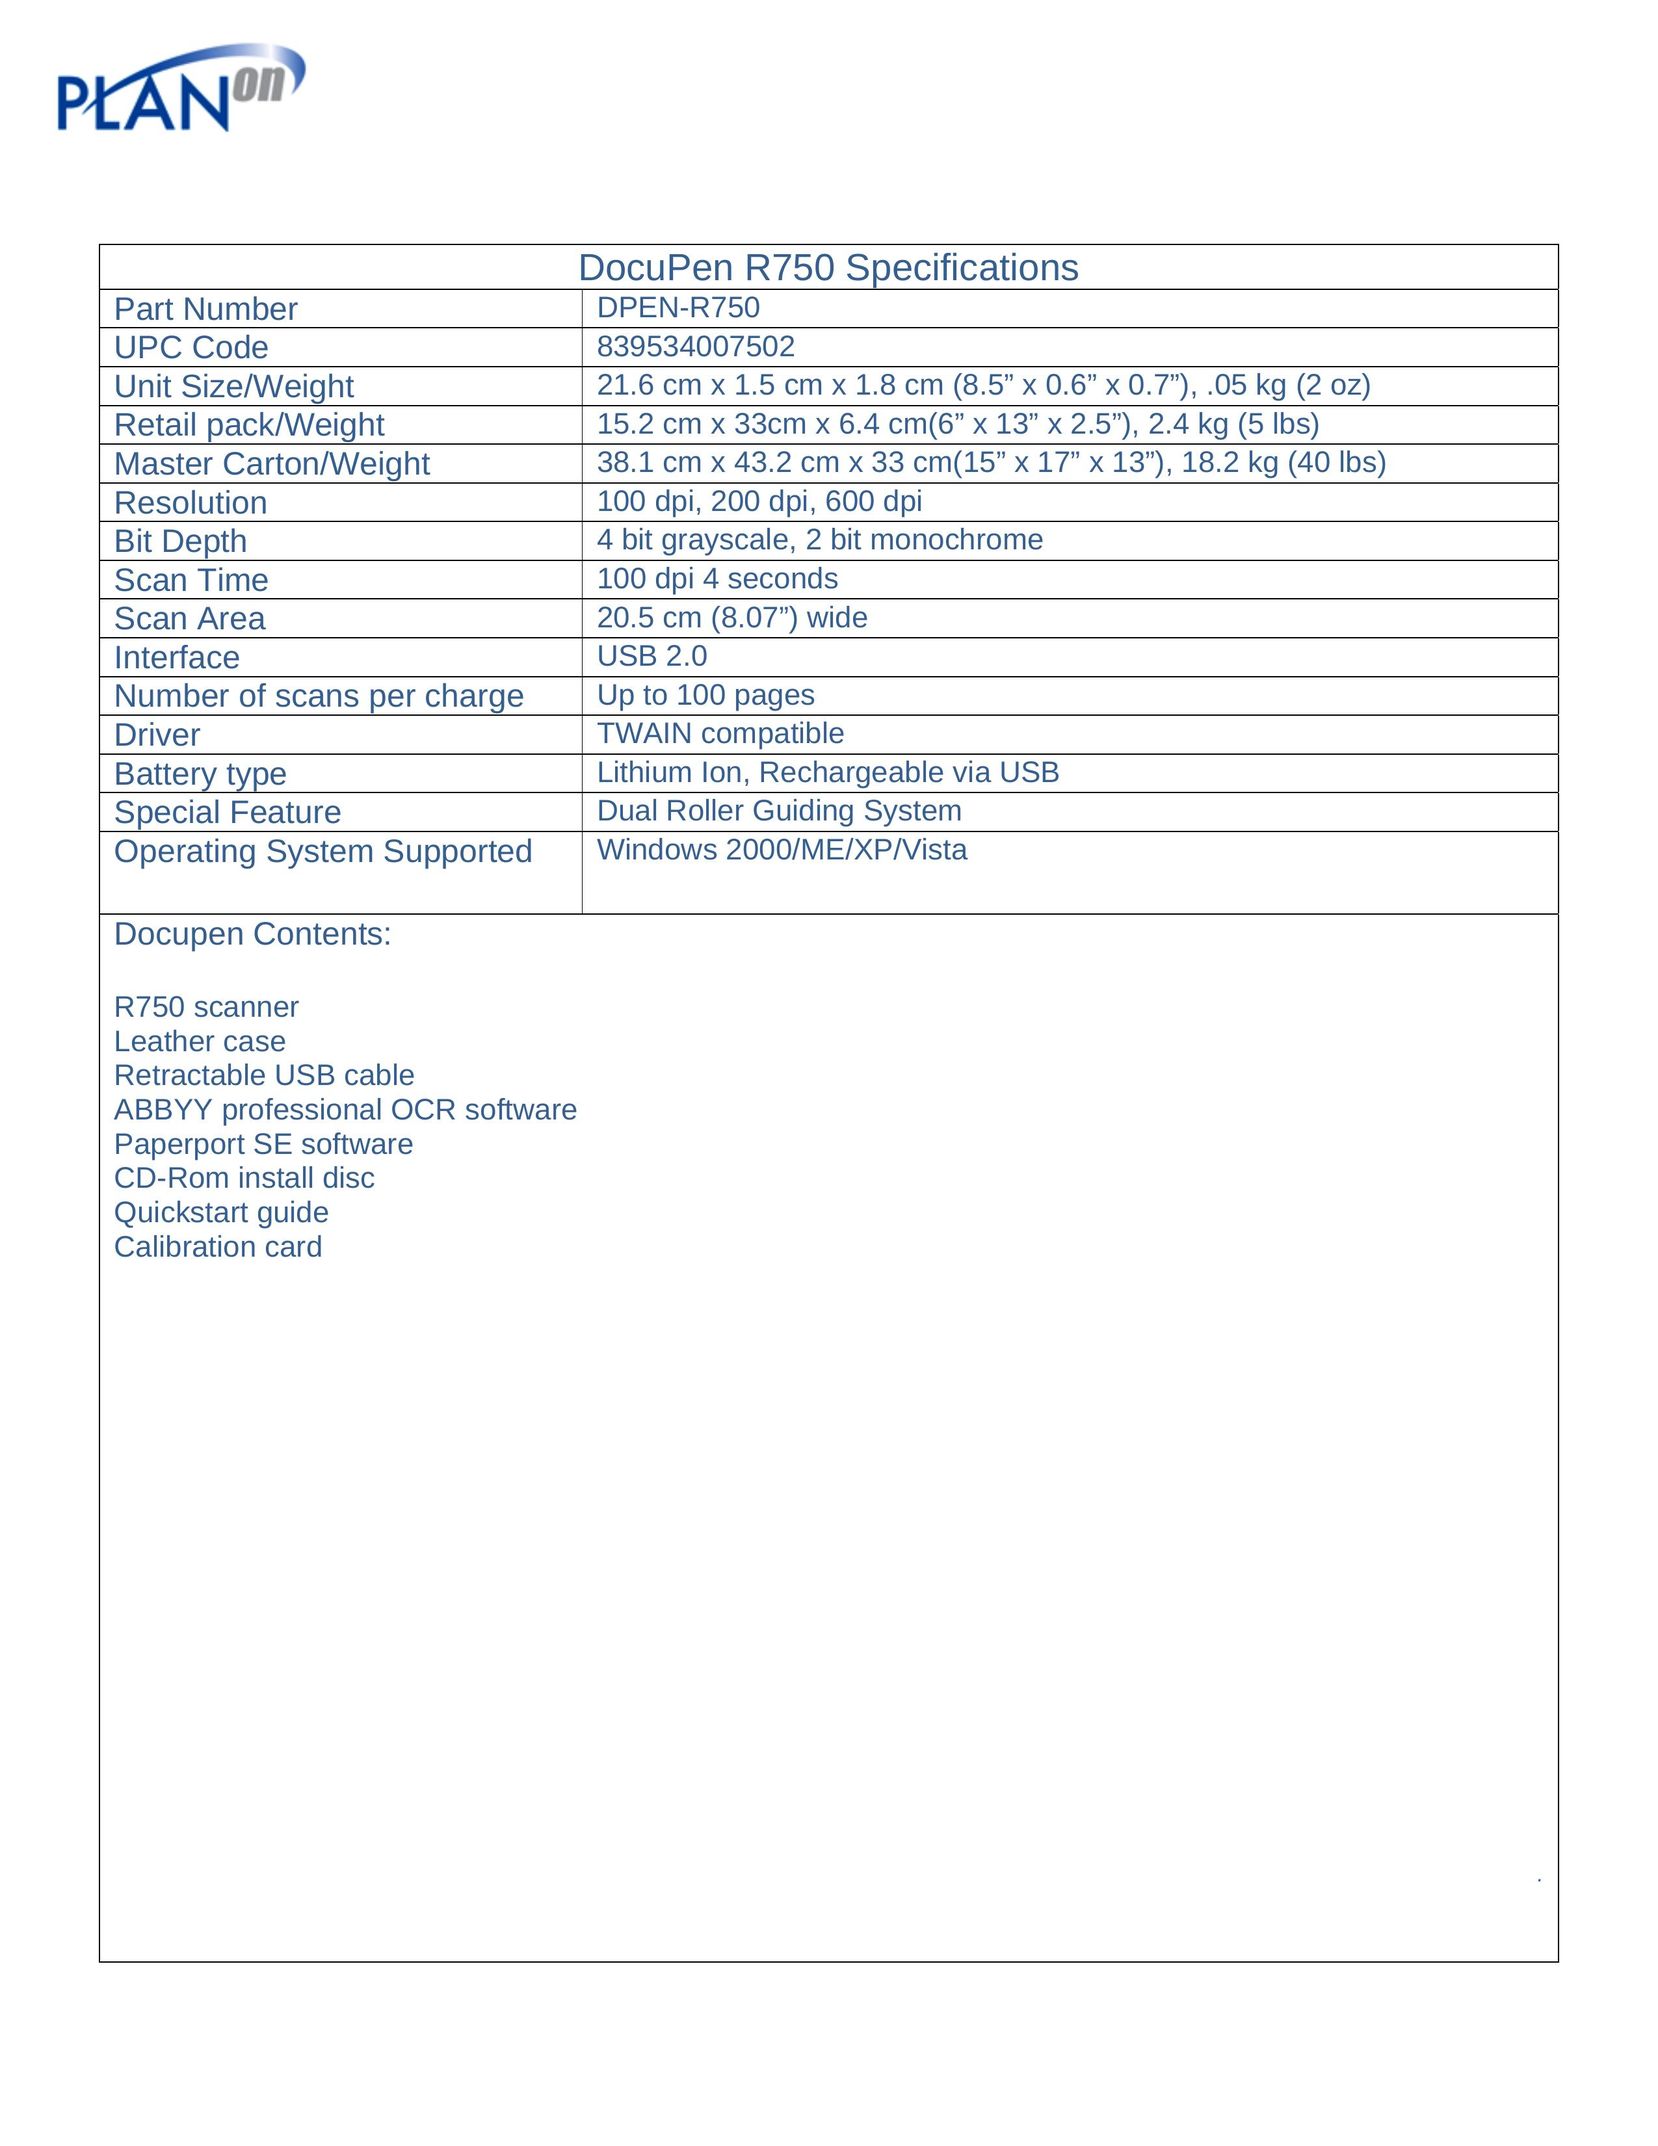 Planon System Solutions DPEN-R750 Scanner User Manual